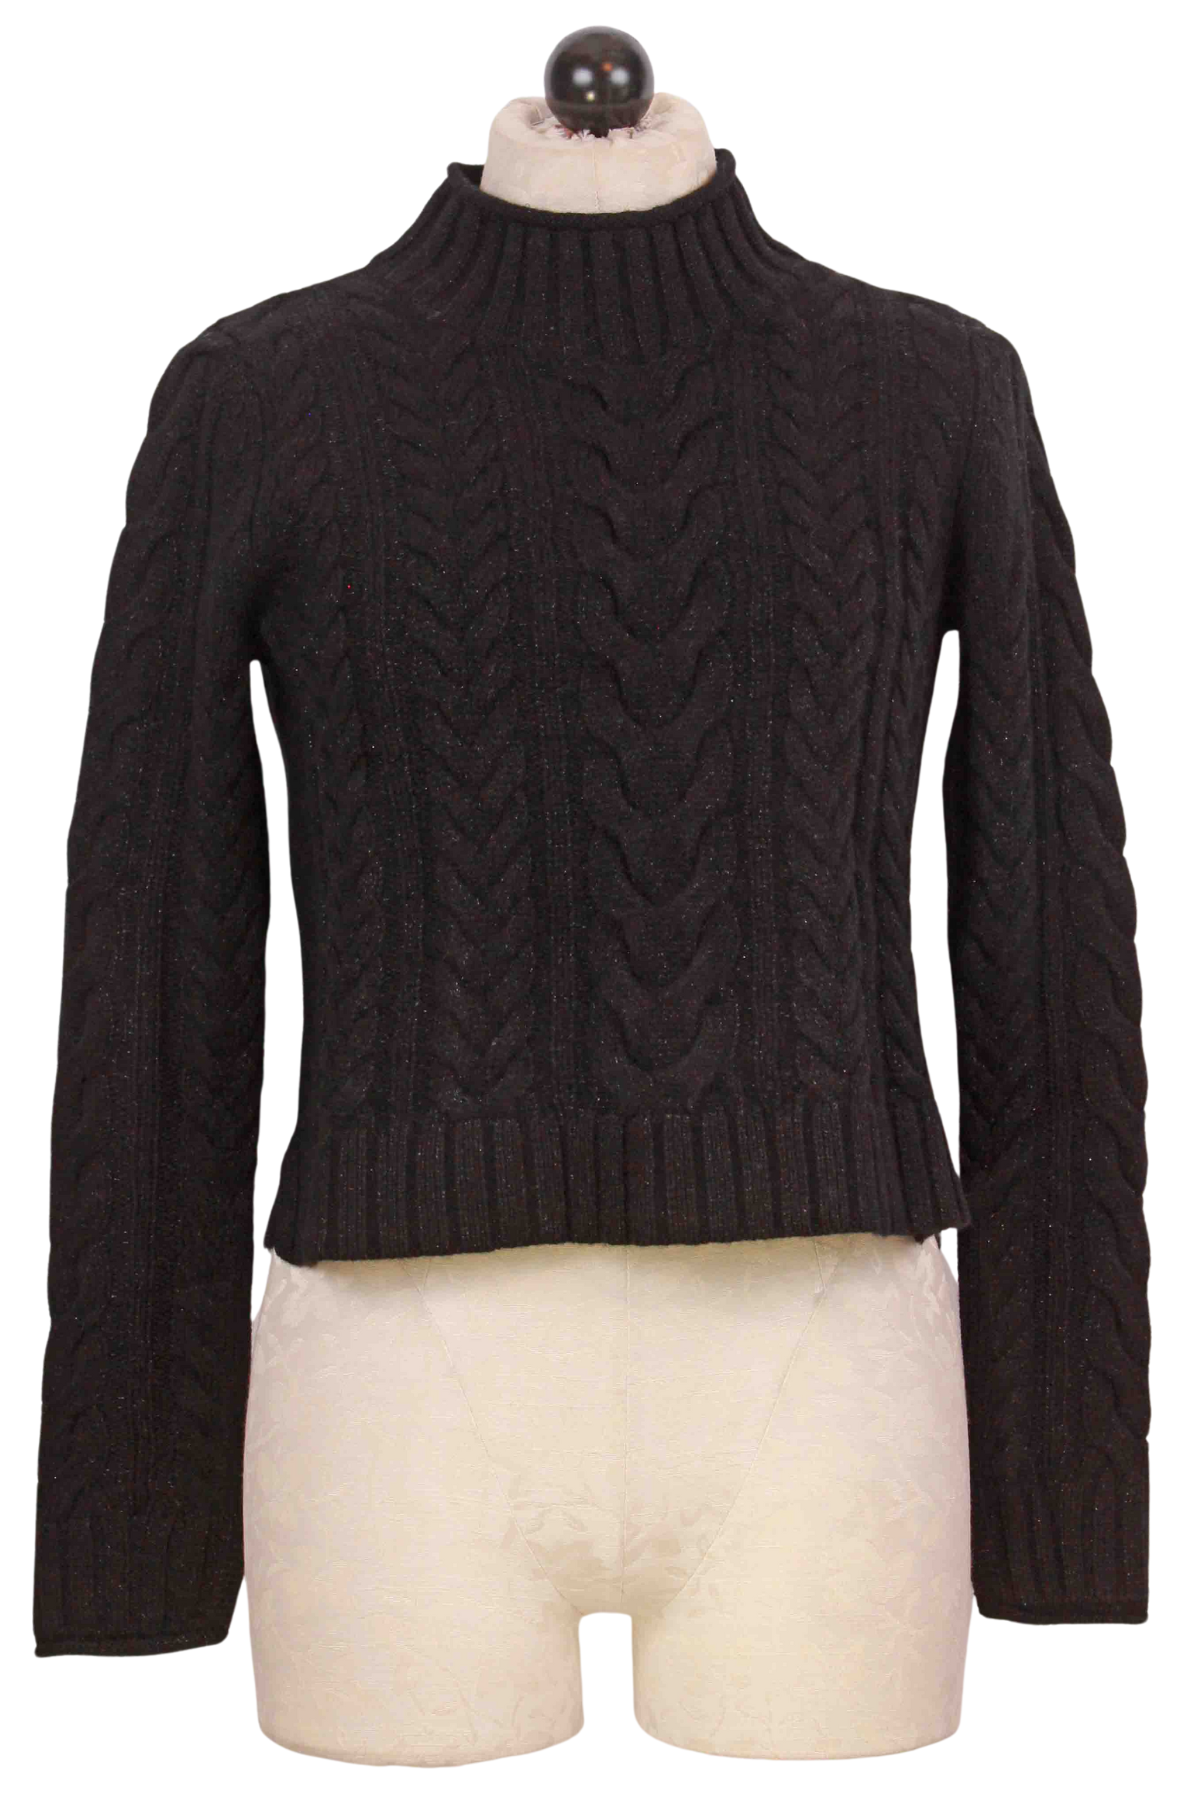 black Merino Lurex Crop Cable Turtleneck Sweater by Alashan Cashmere